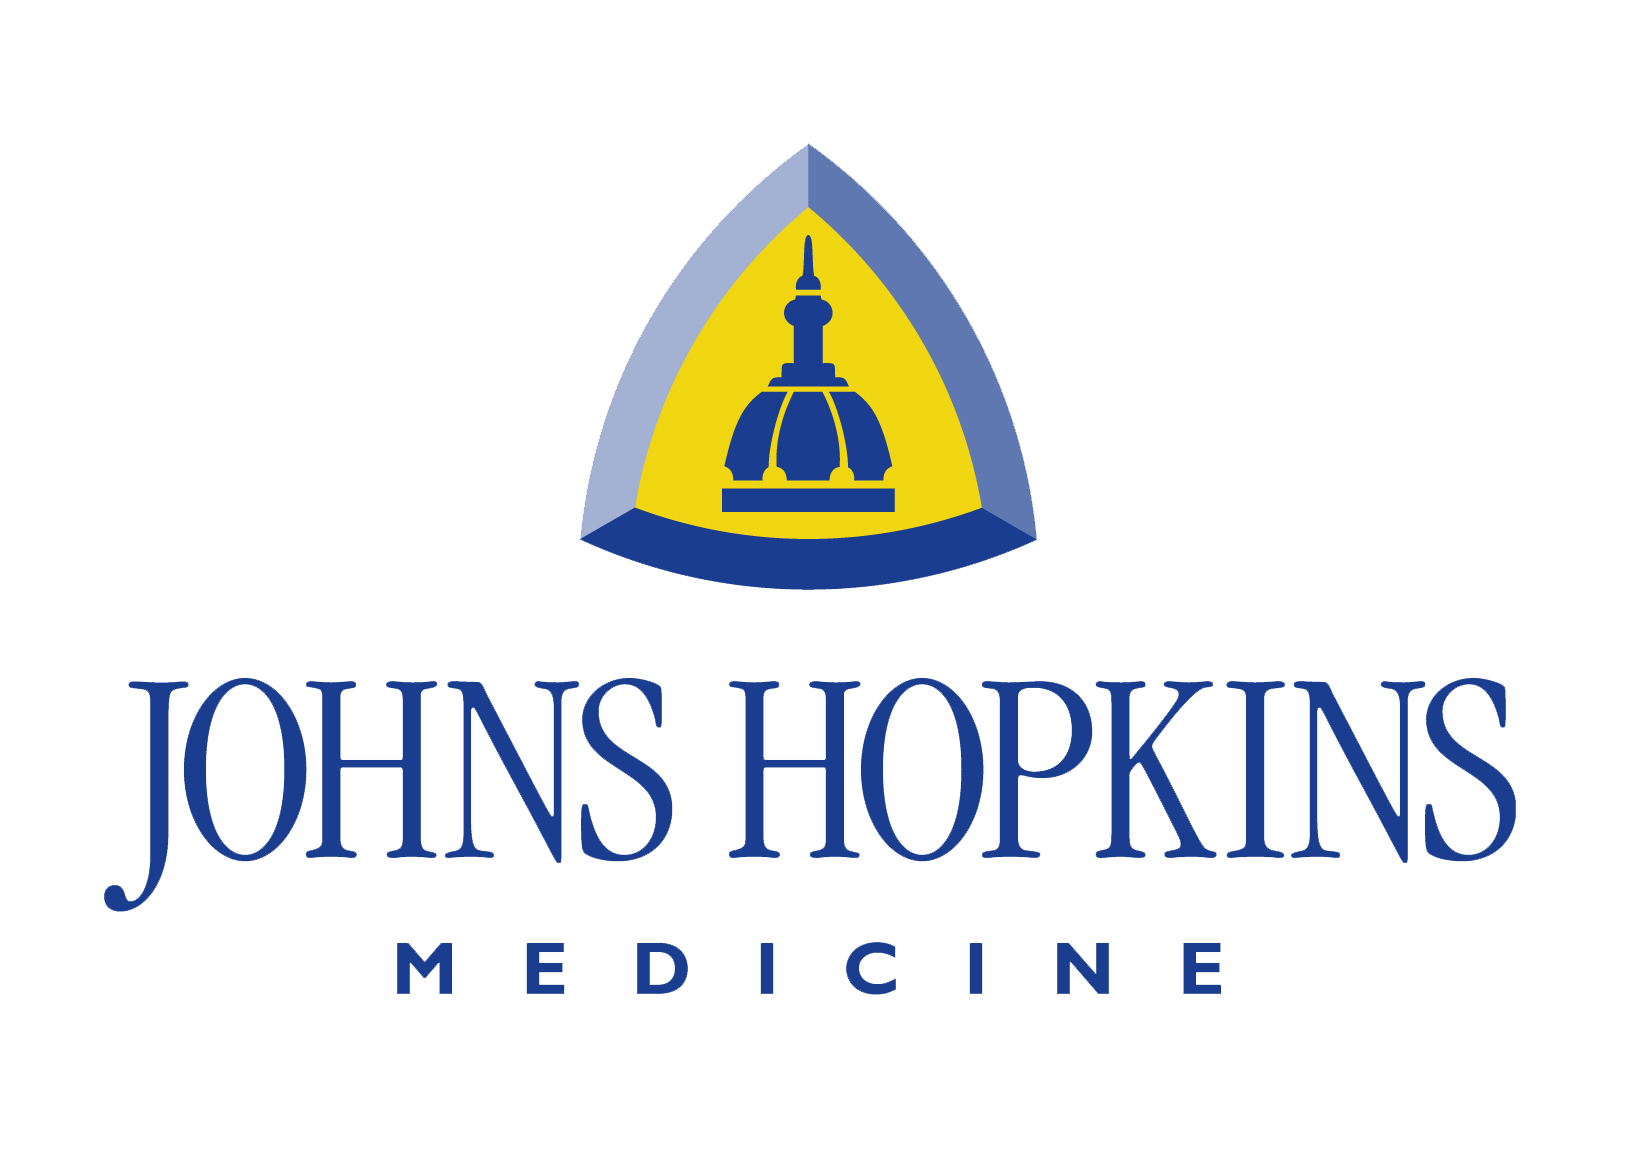 Johns Hopkins employs ONU engineers